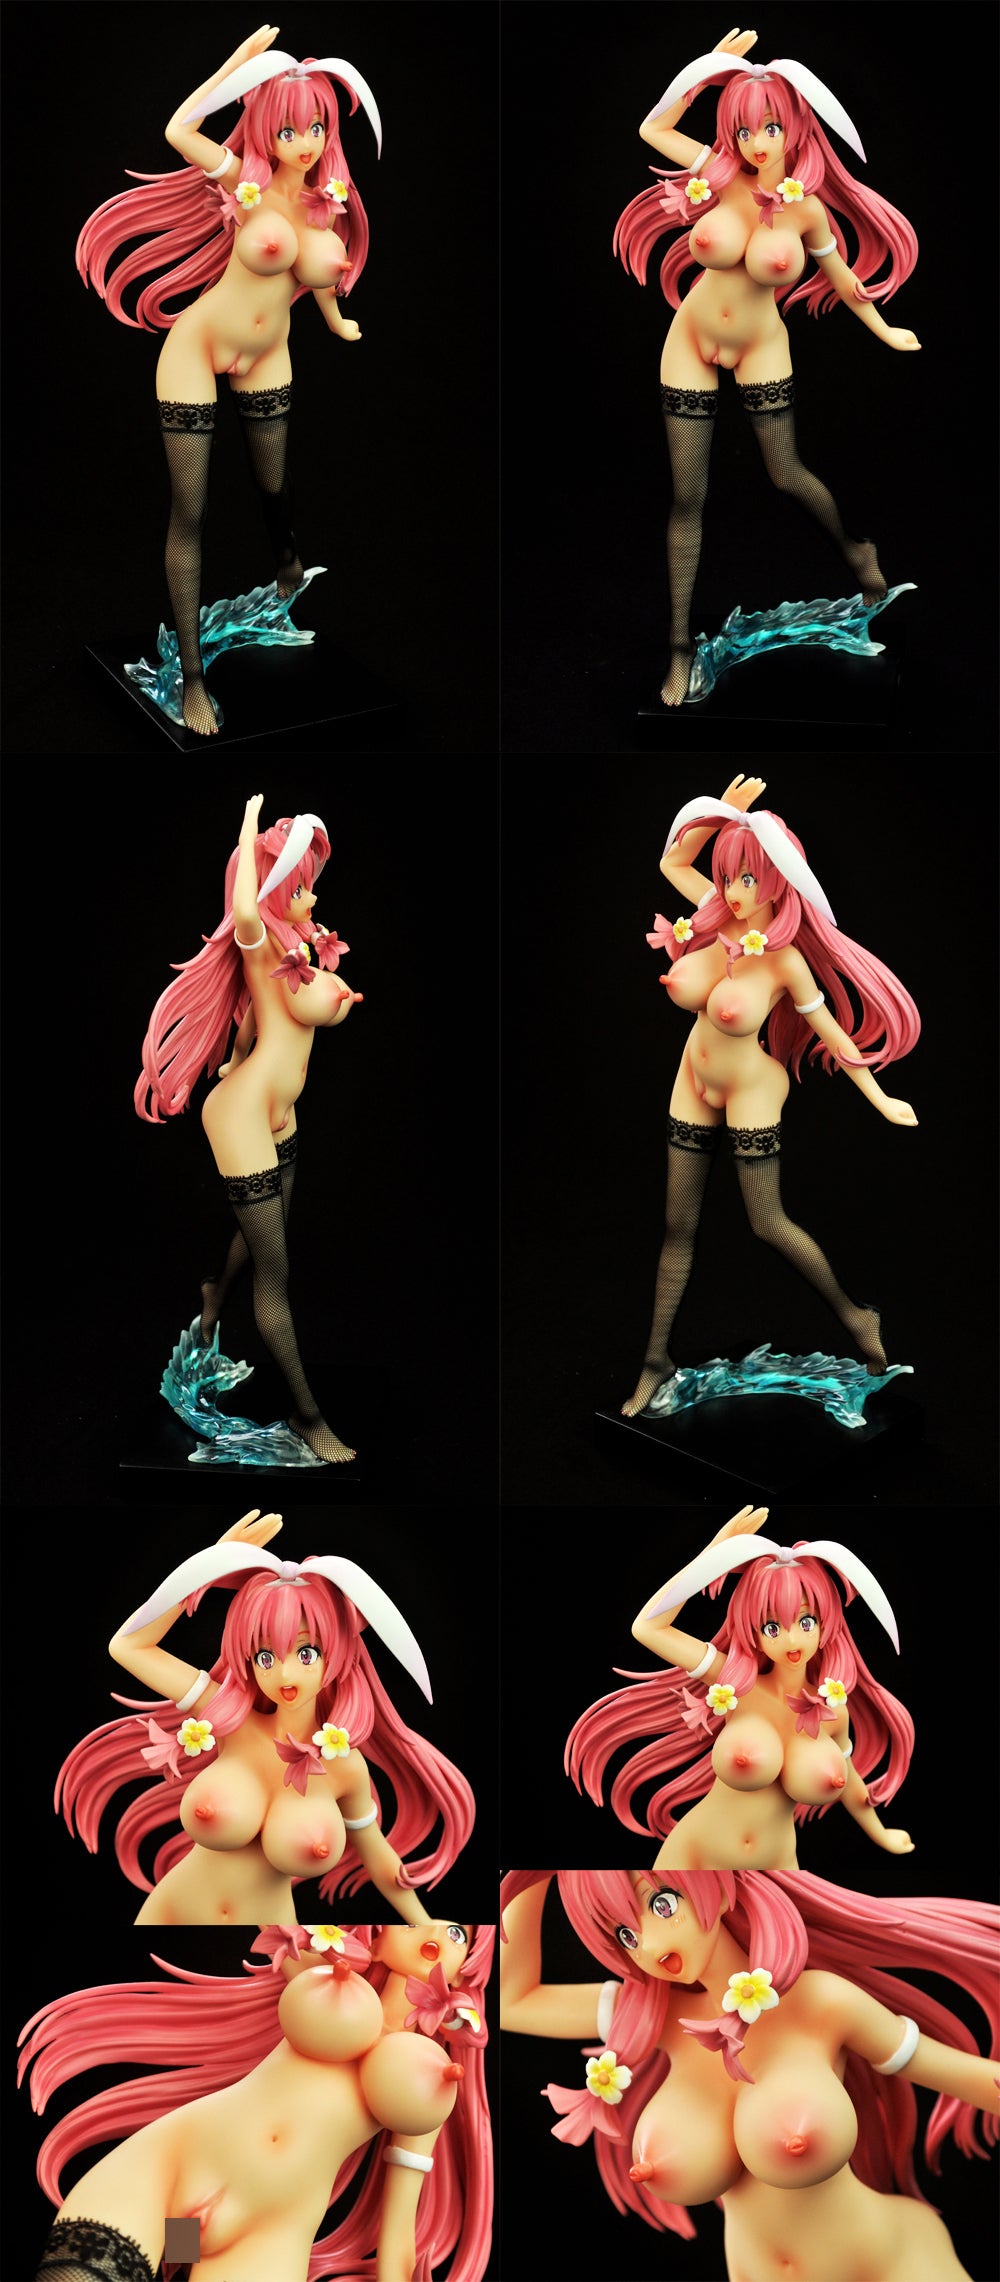 Daiki Peach Girl Selfie: Miho Kunagisa 1/5 anime girl figure naked anime figures